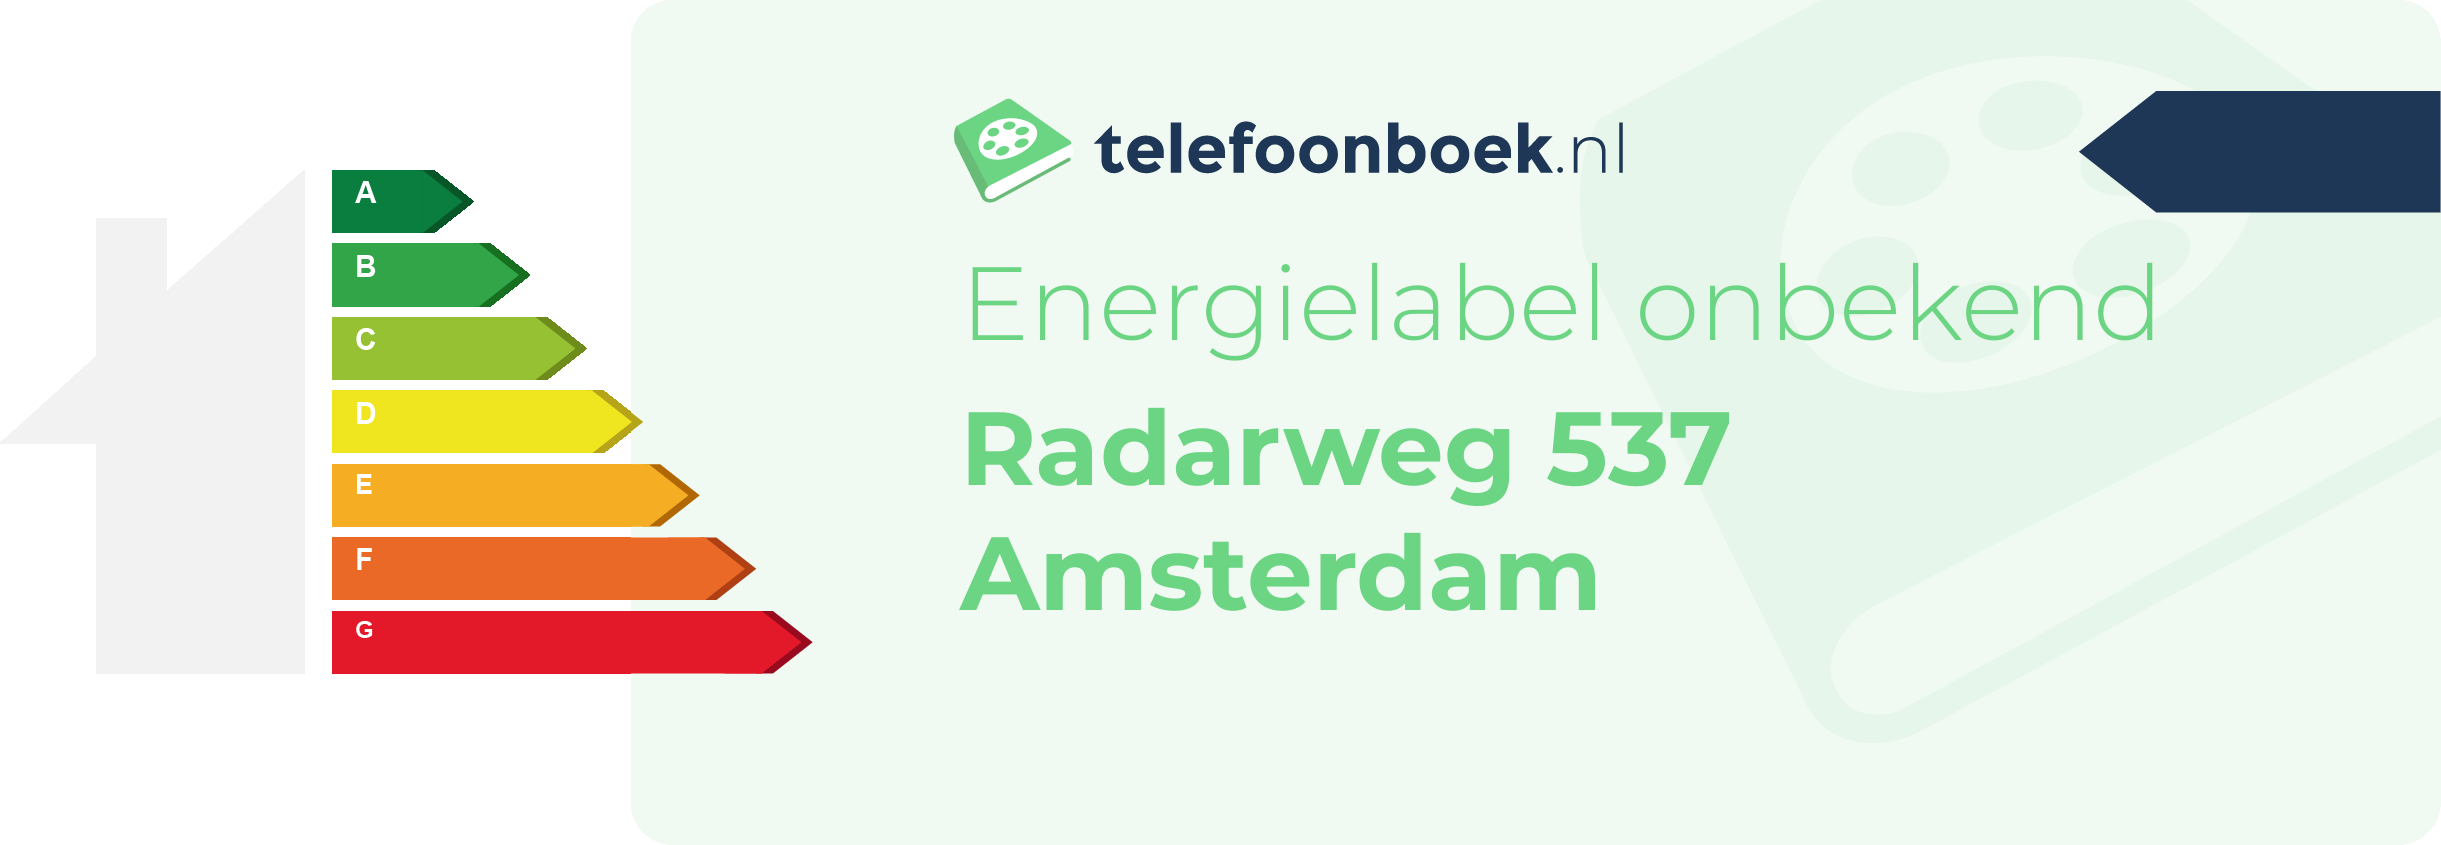 Energielabel Radarweg 537 Amsterdam